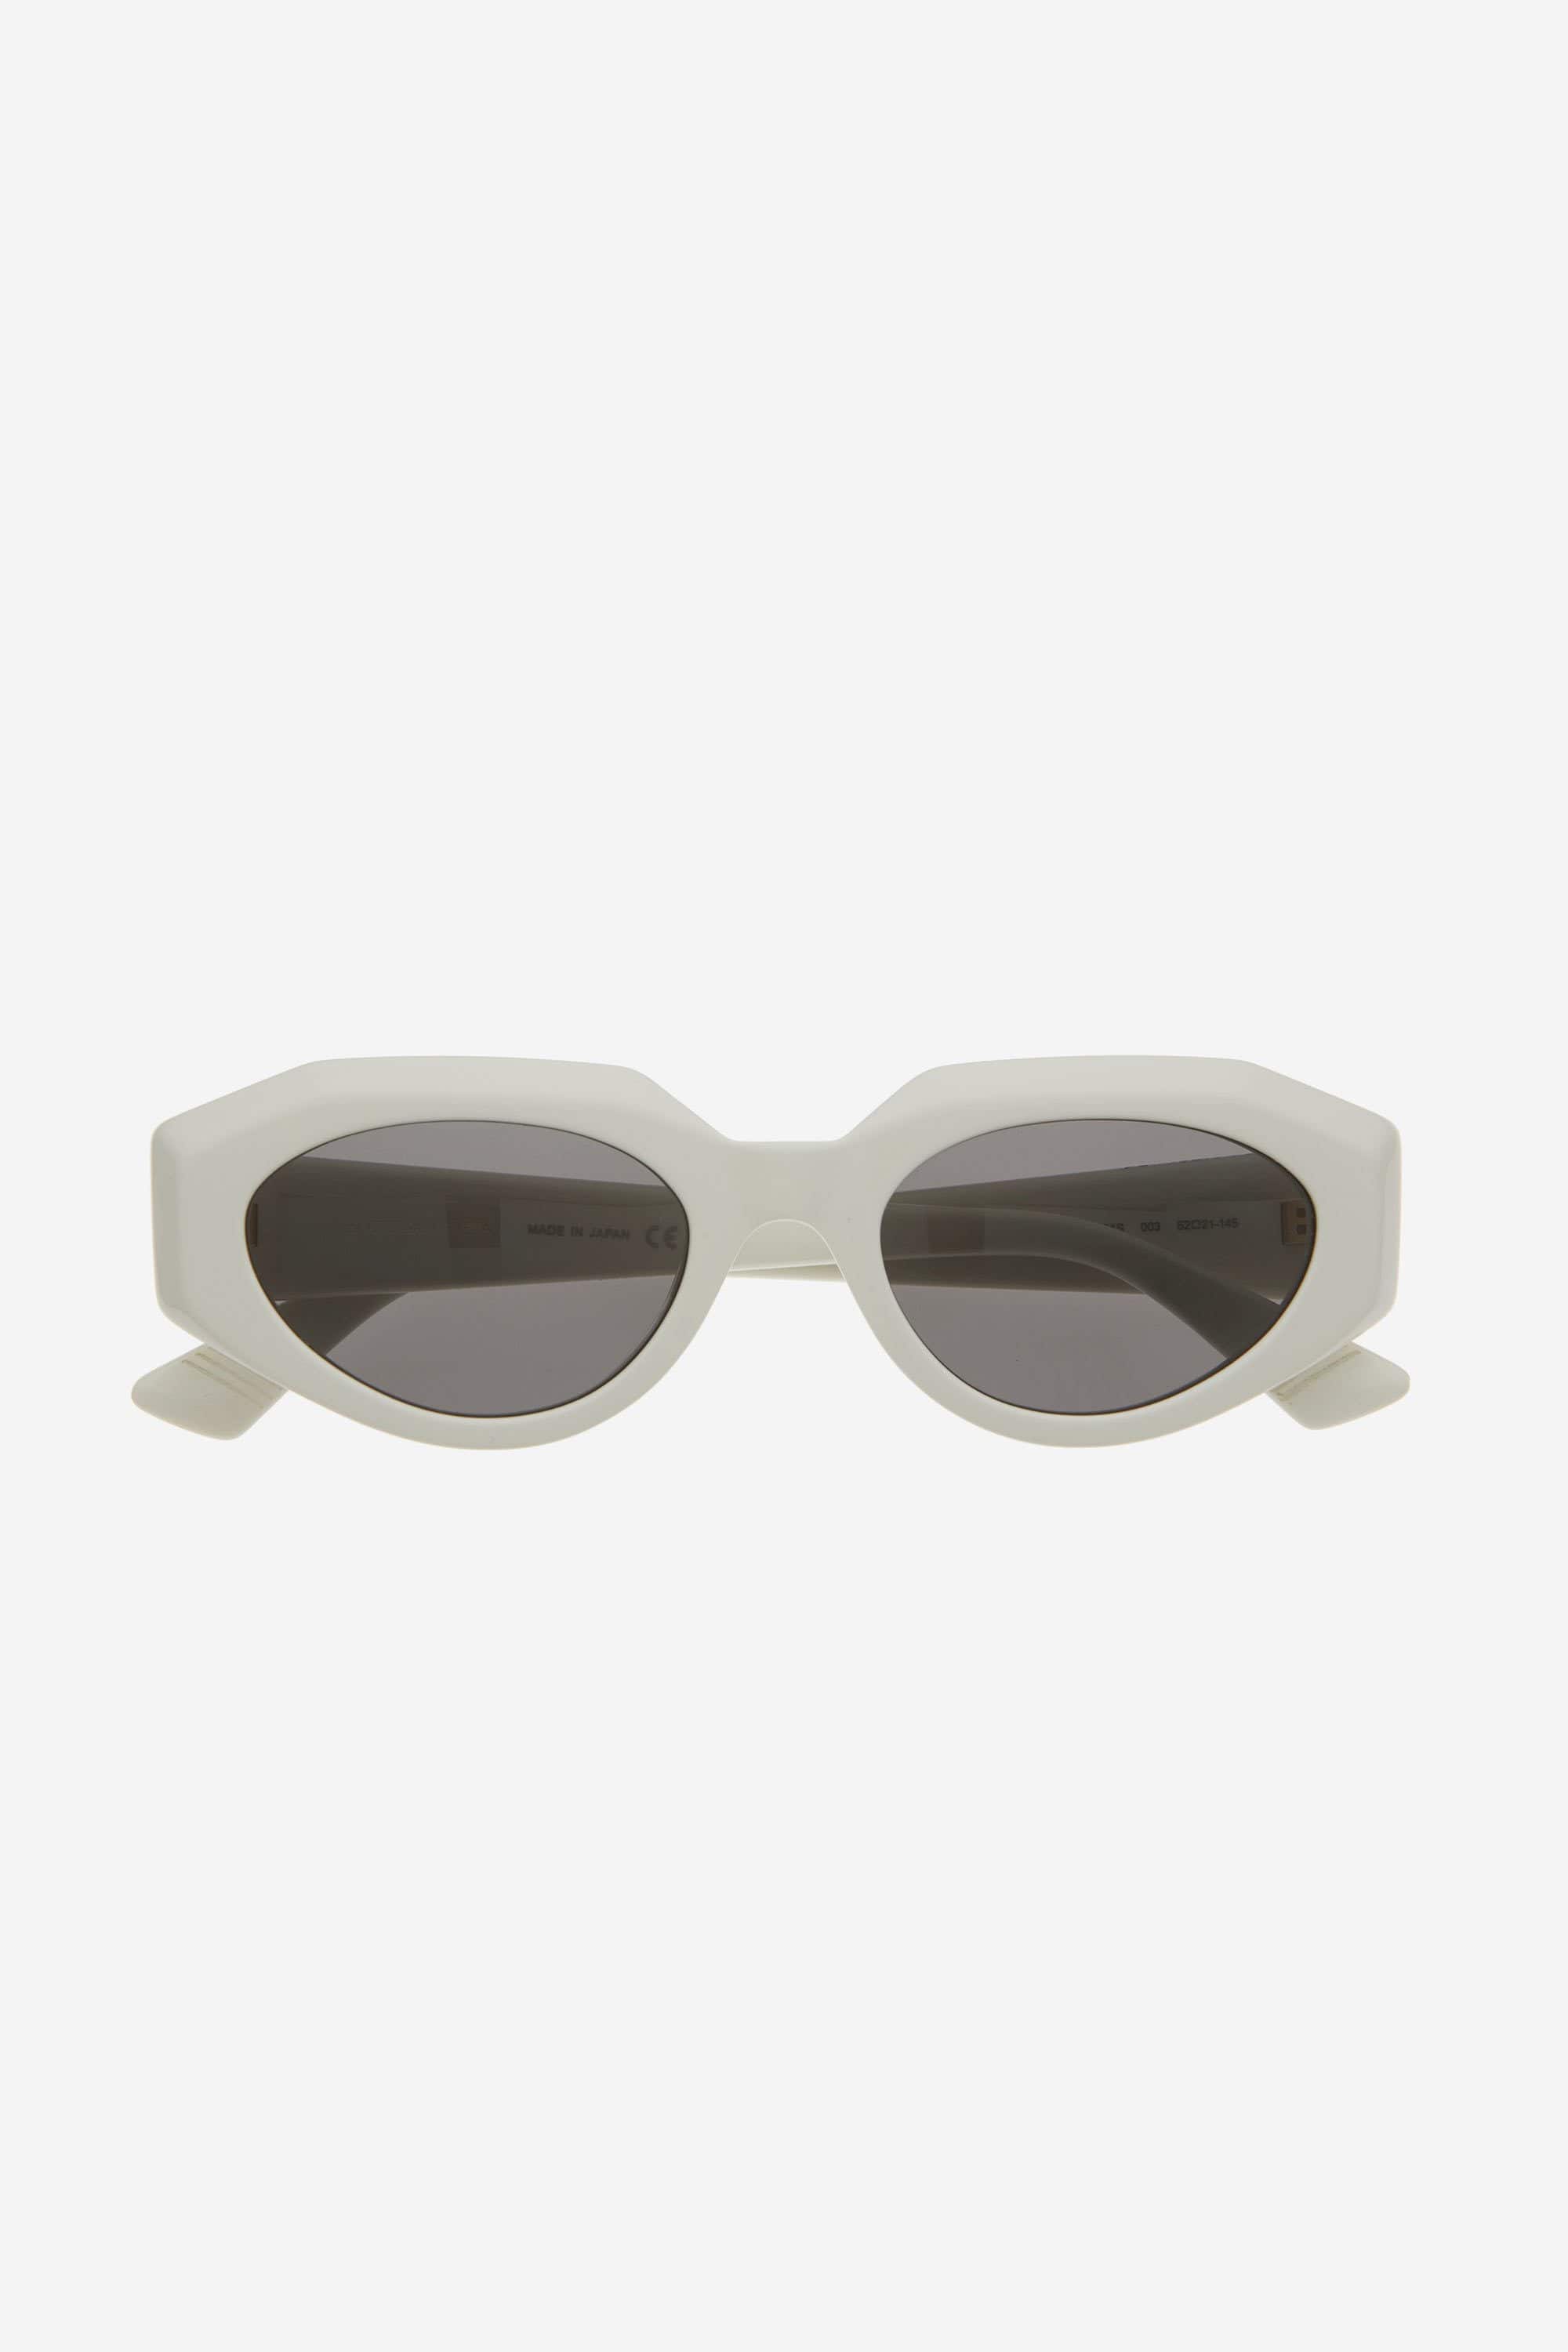 Bottega Veneta bold oval femenine ivory sunglasses - Eyewear Club